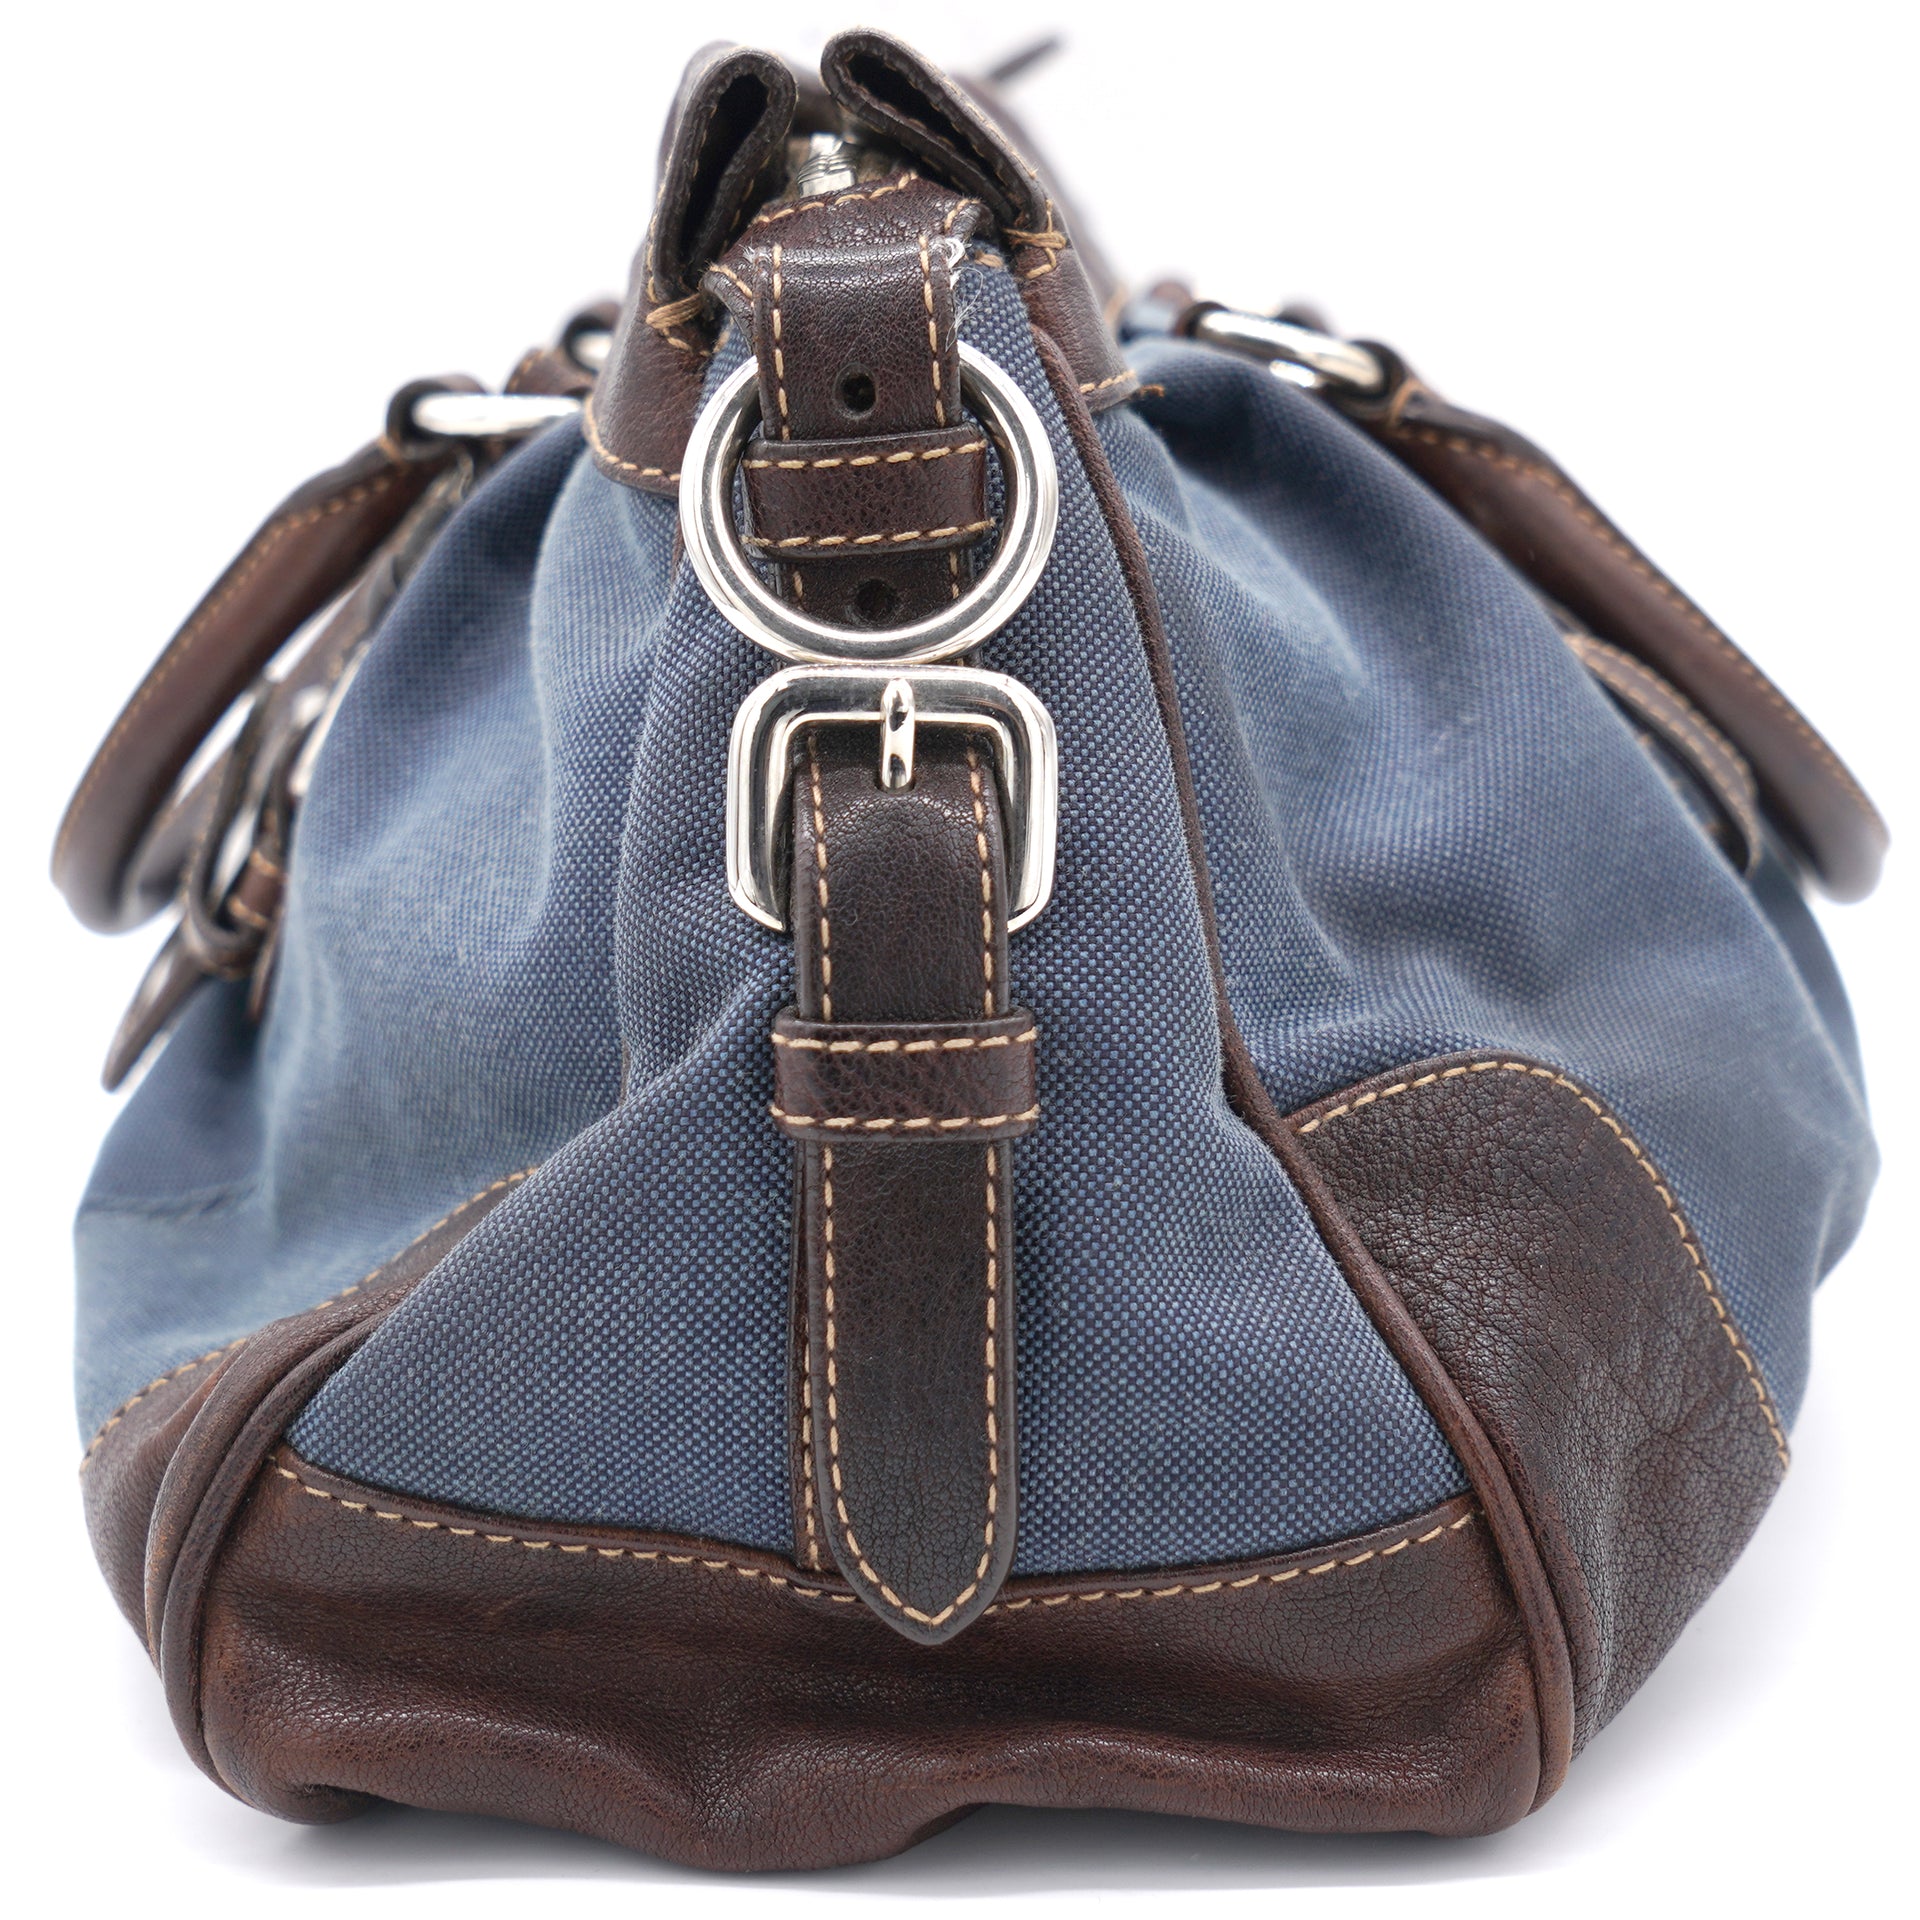 Shop authentic Prada Denim Chain Shoulder Bag at revogue for just USD 425.00